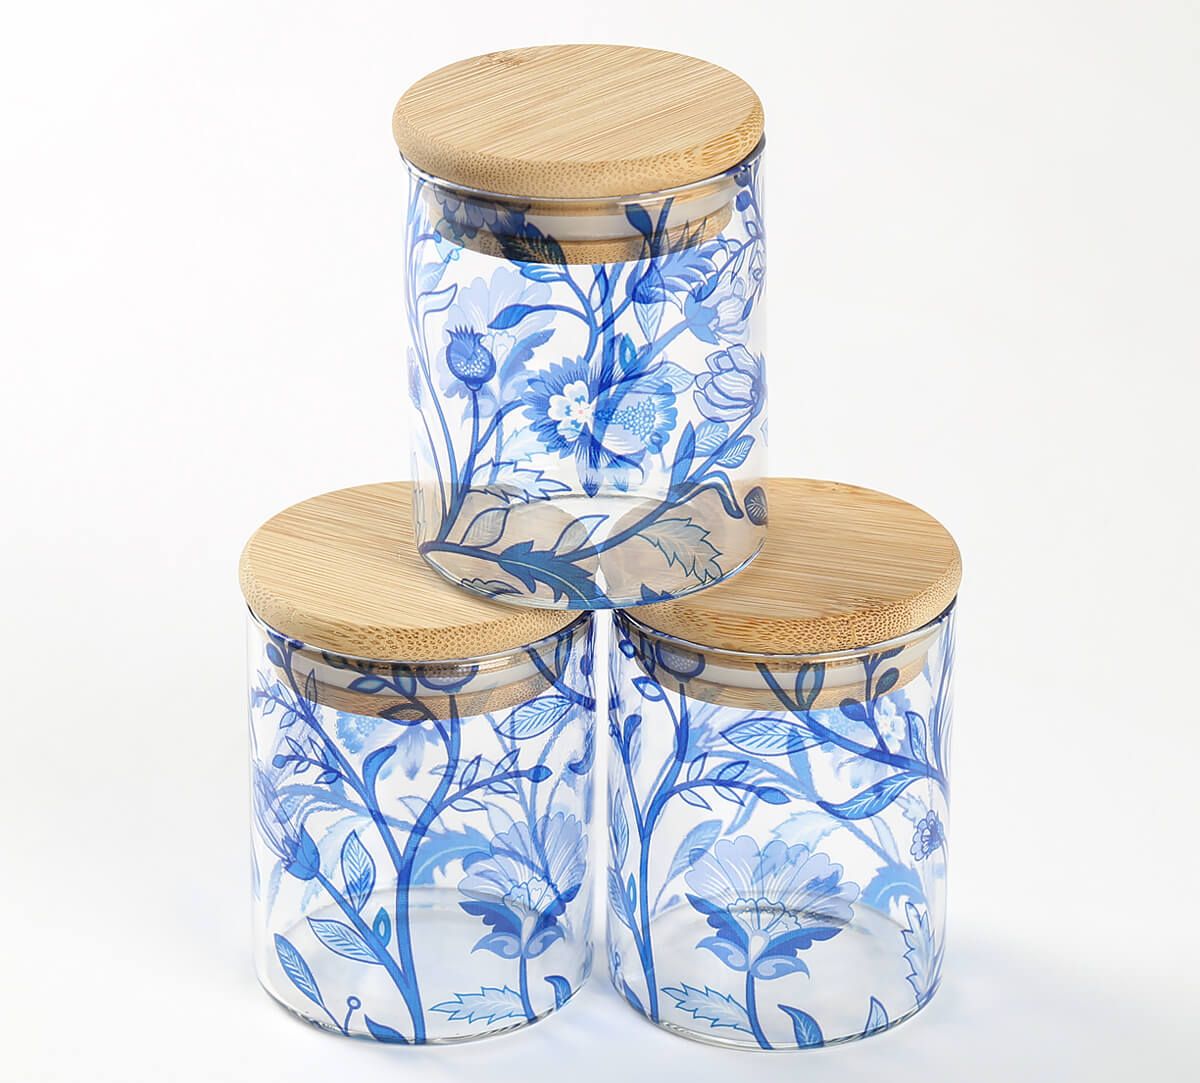 India Circus by Krsnaa Mehta Blaue Blume Glass Jars Set of 3